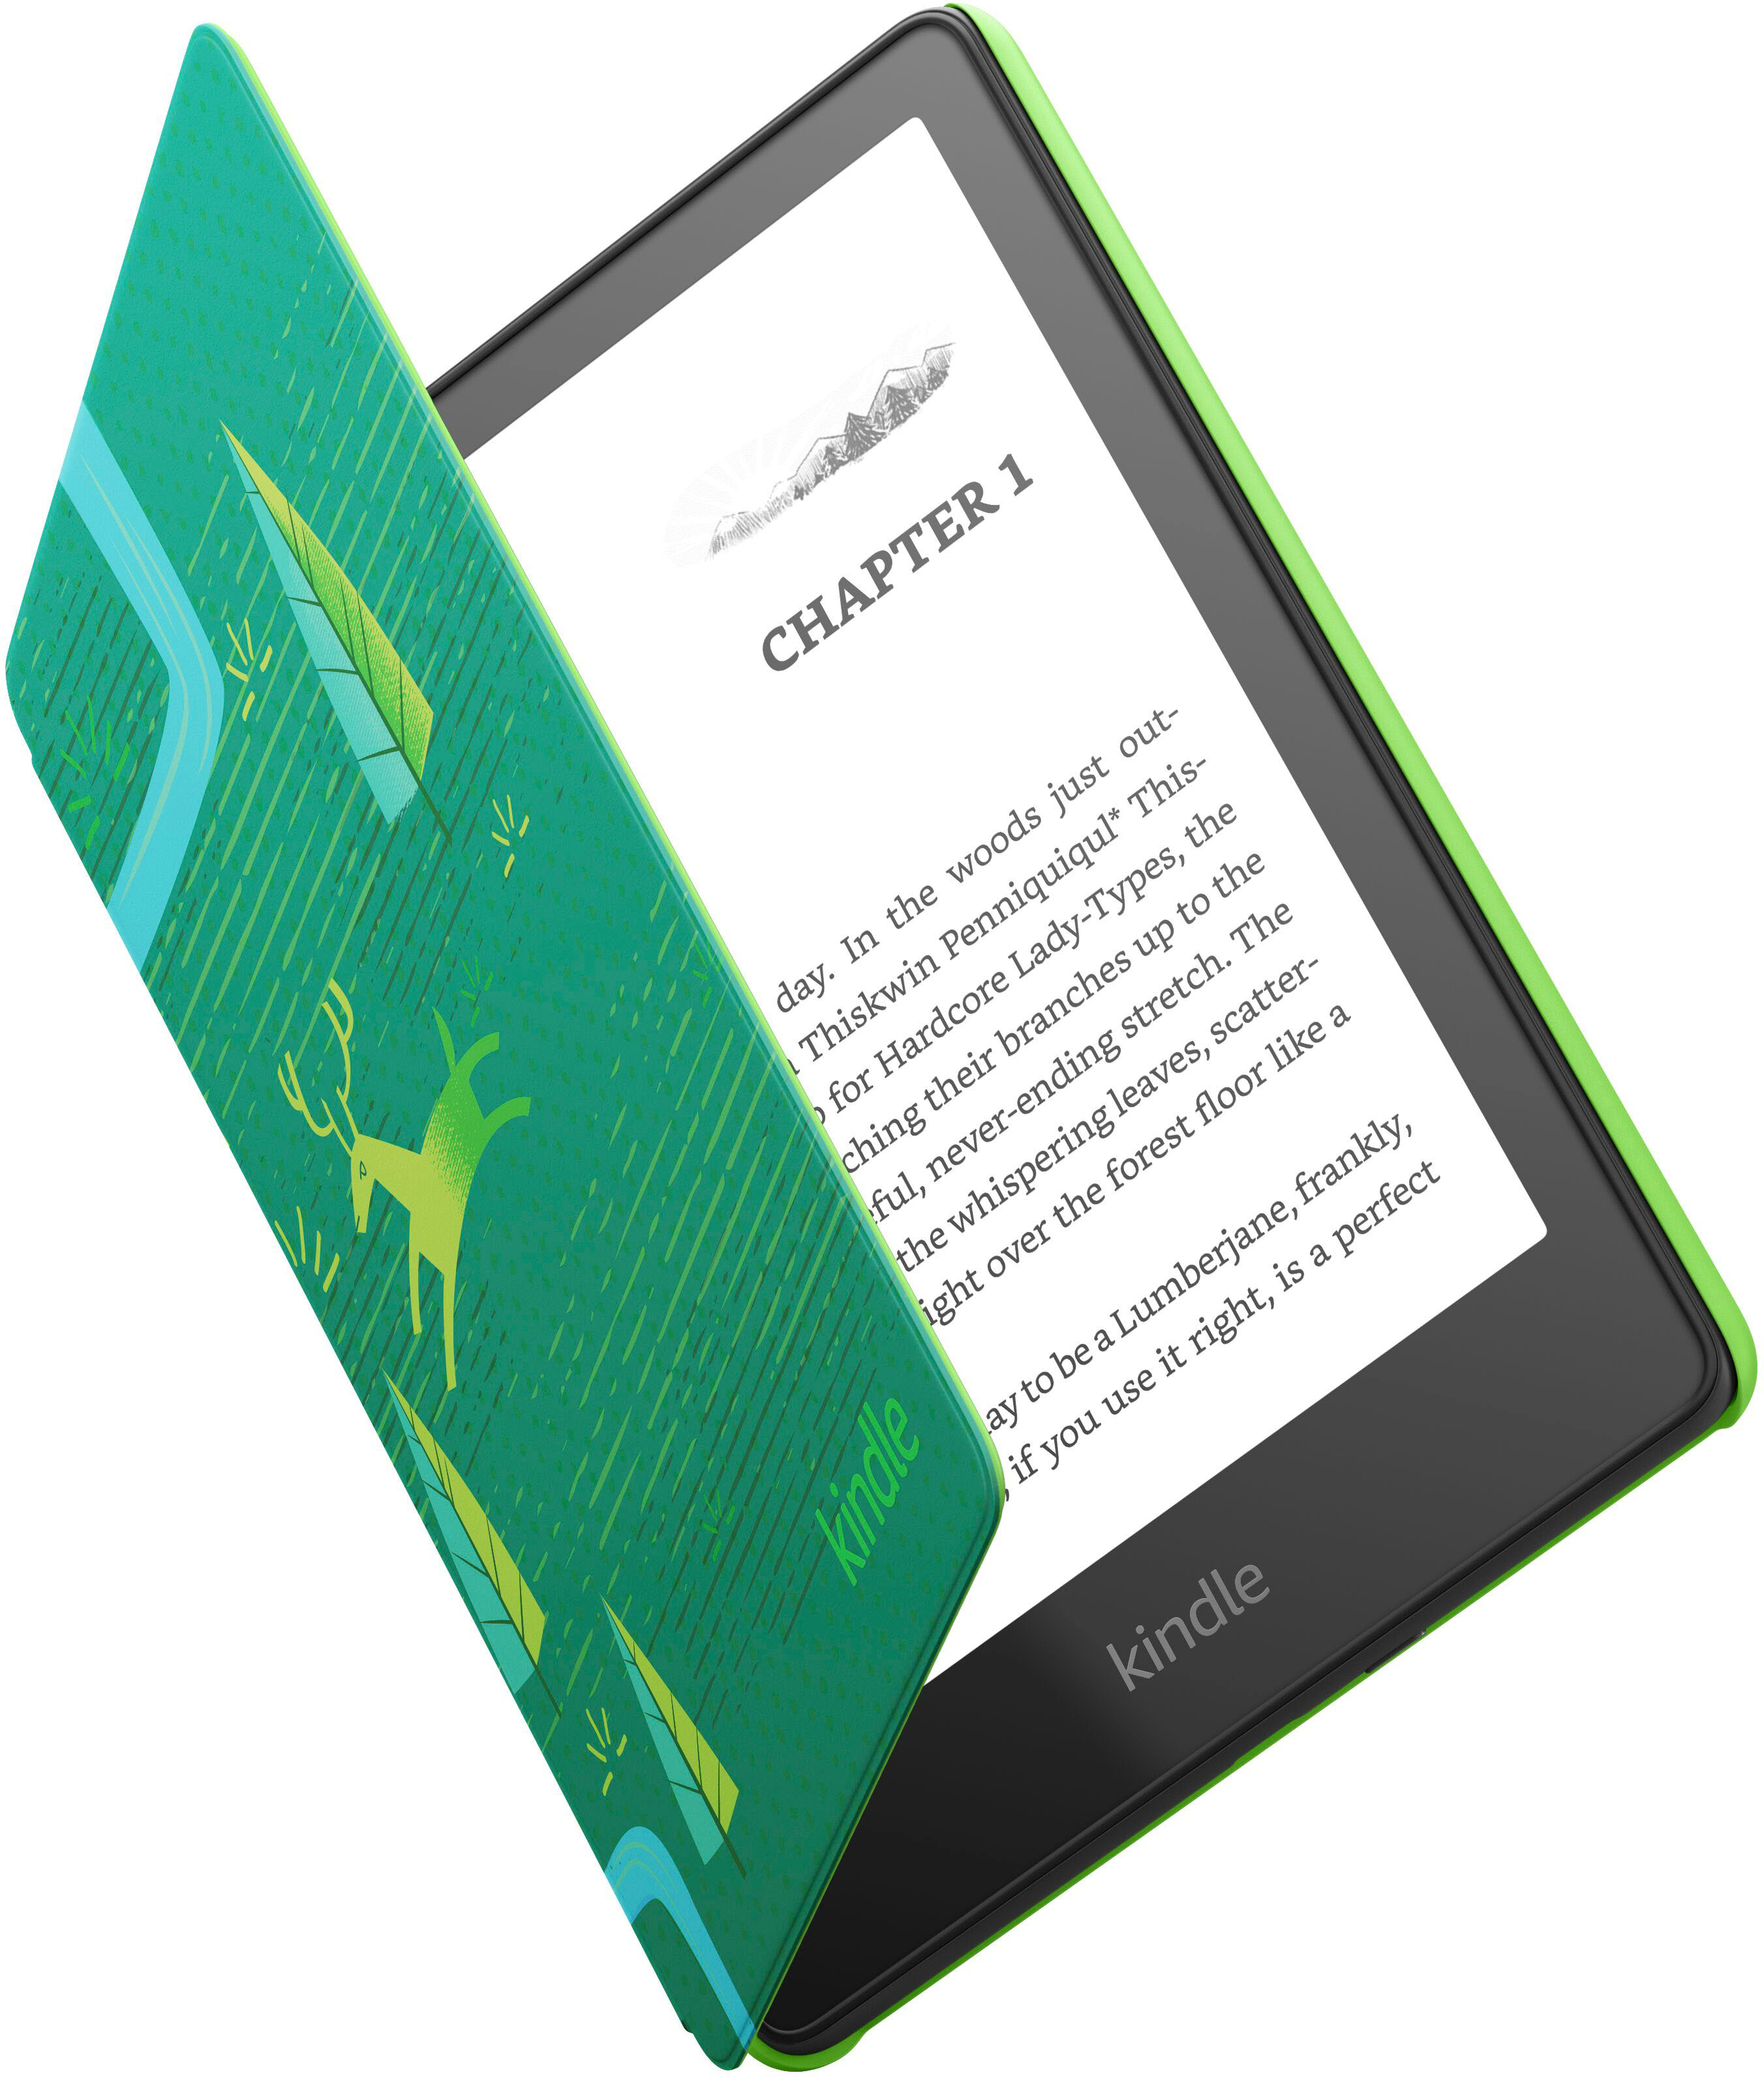 Buy Kindle Paperwhite 8gb online